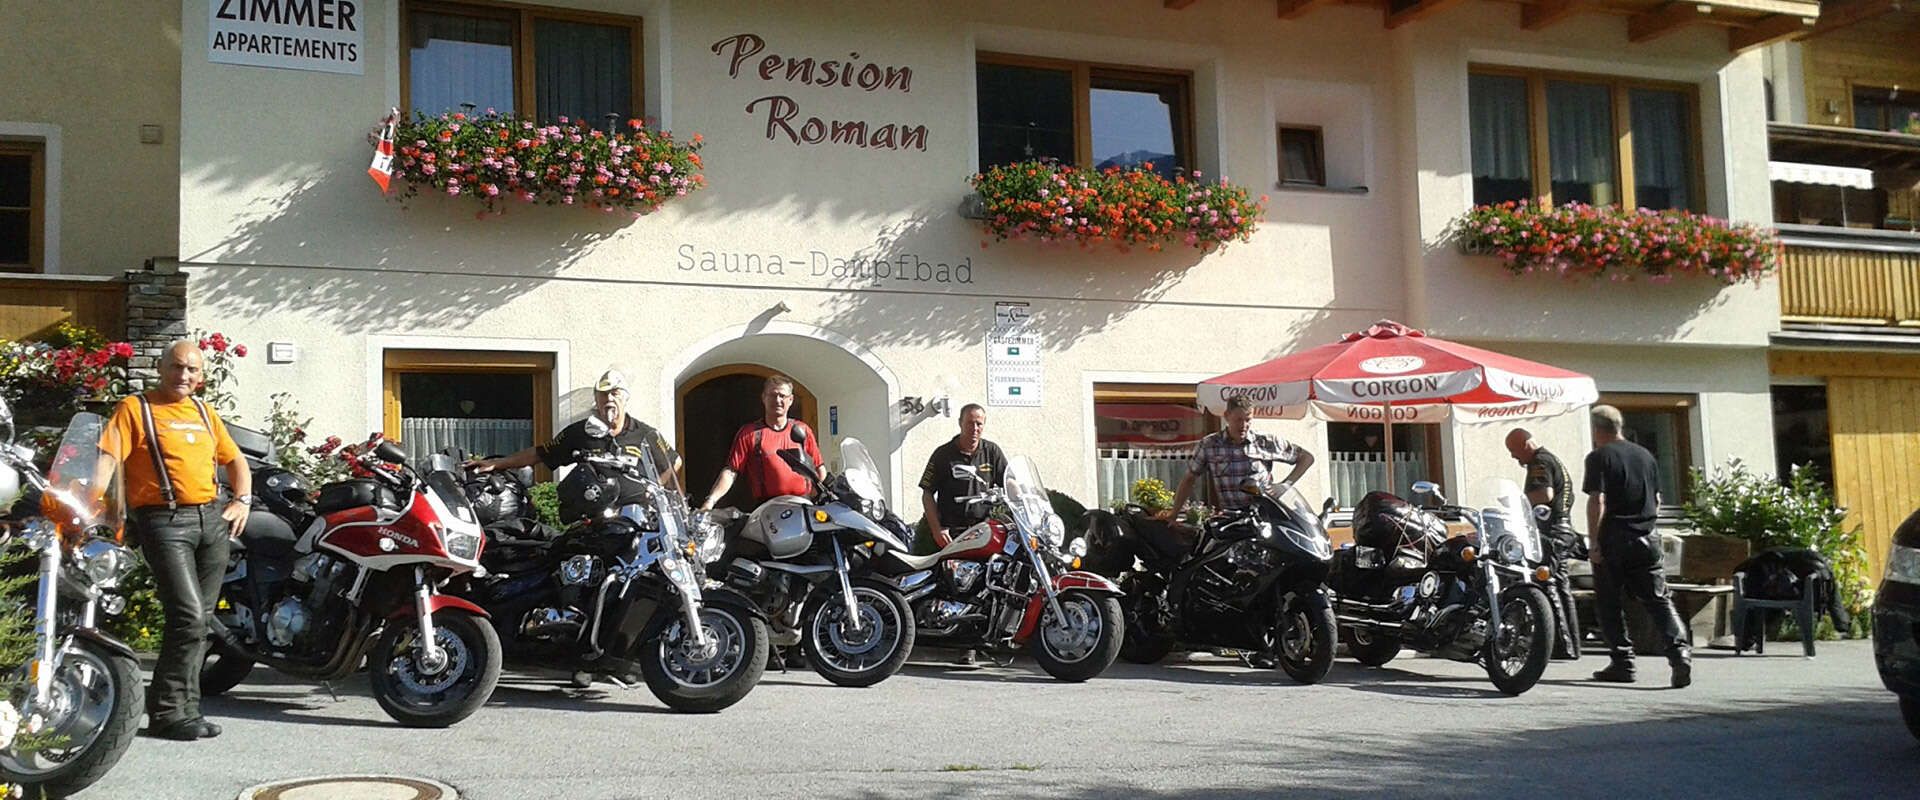 Pension Roman as biker-friendly accommodation in Tyrol on the Arlberg